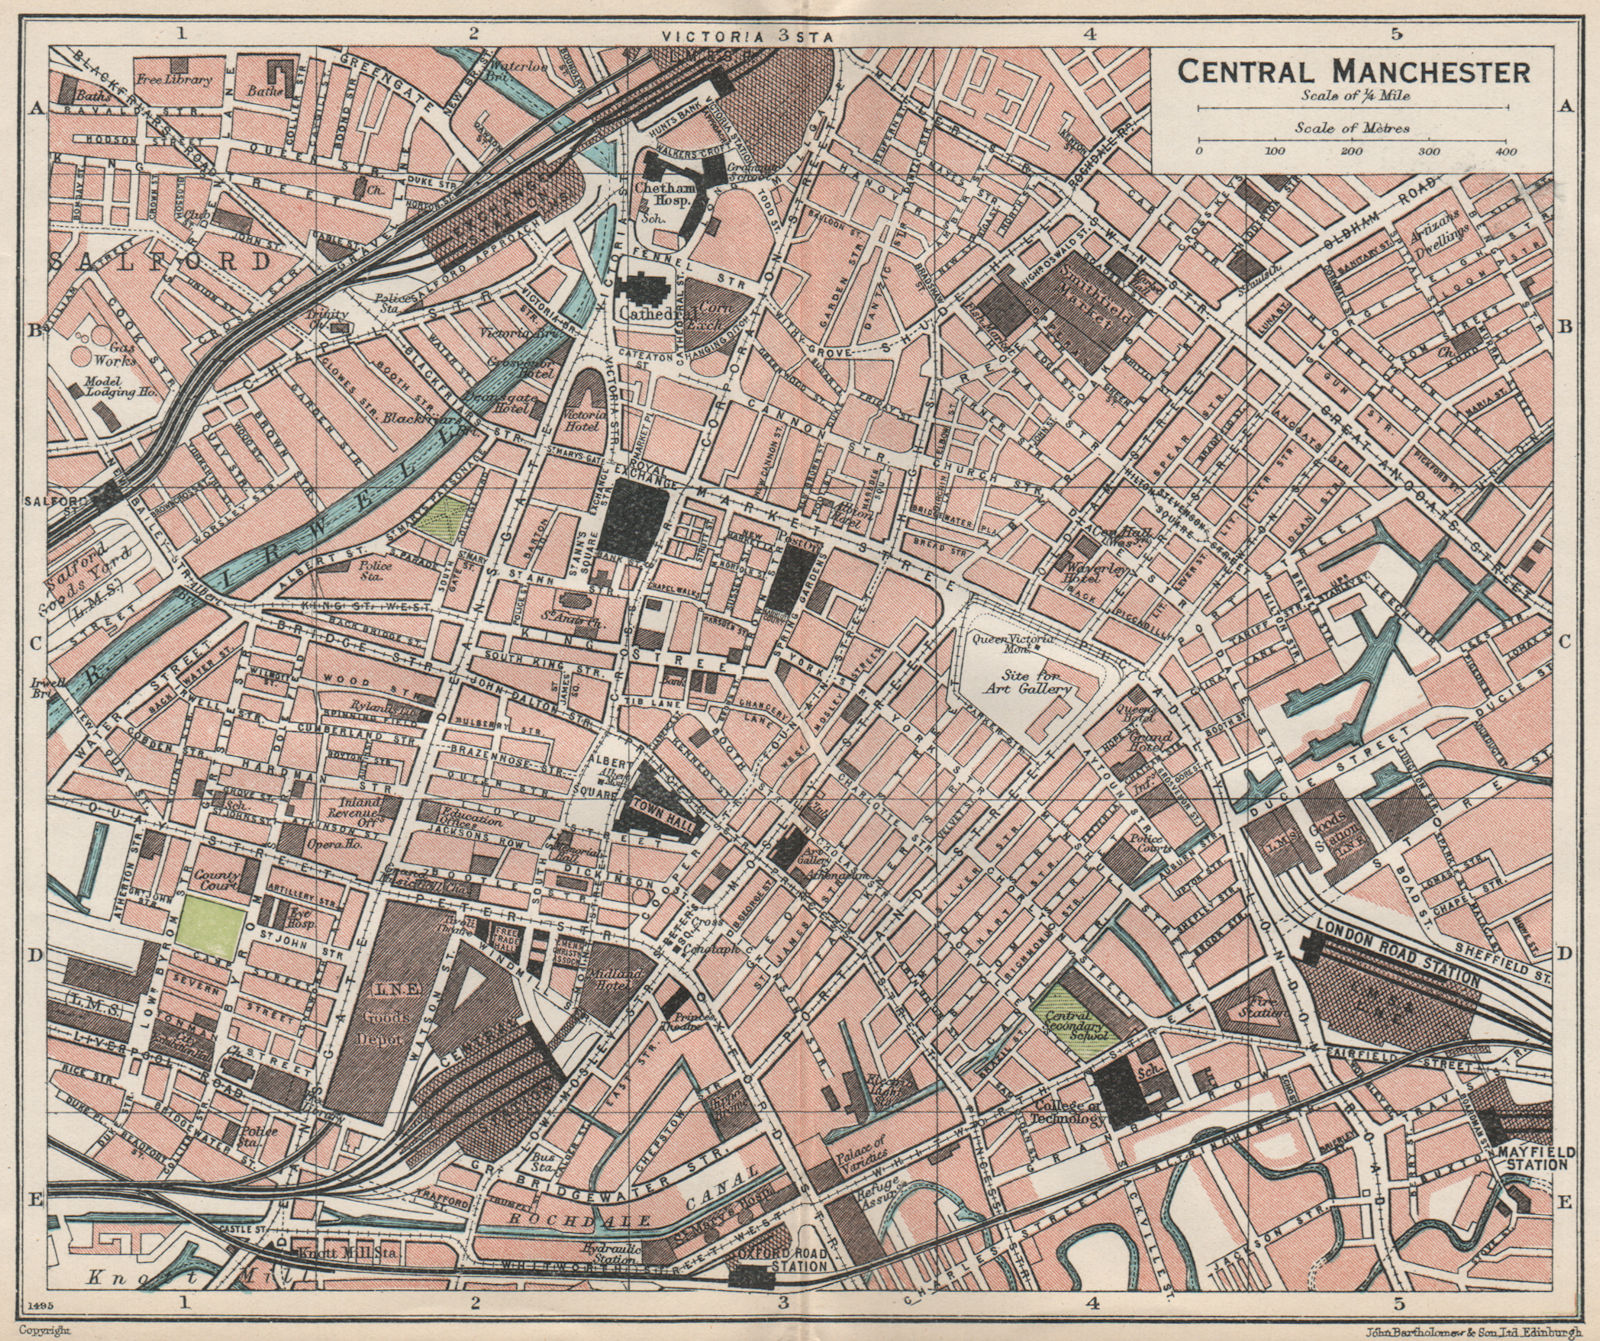 Associate Product CENTRAL MANCHESTER. Vintage town city map plan. Lancashire 1930 old